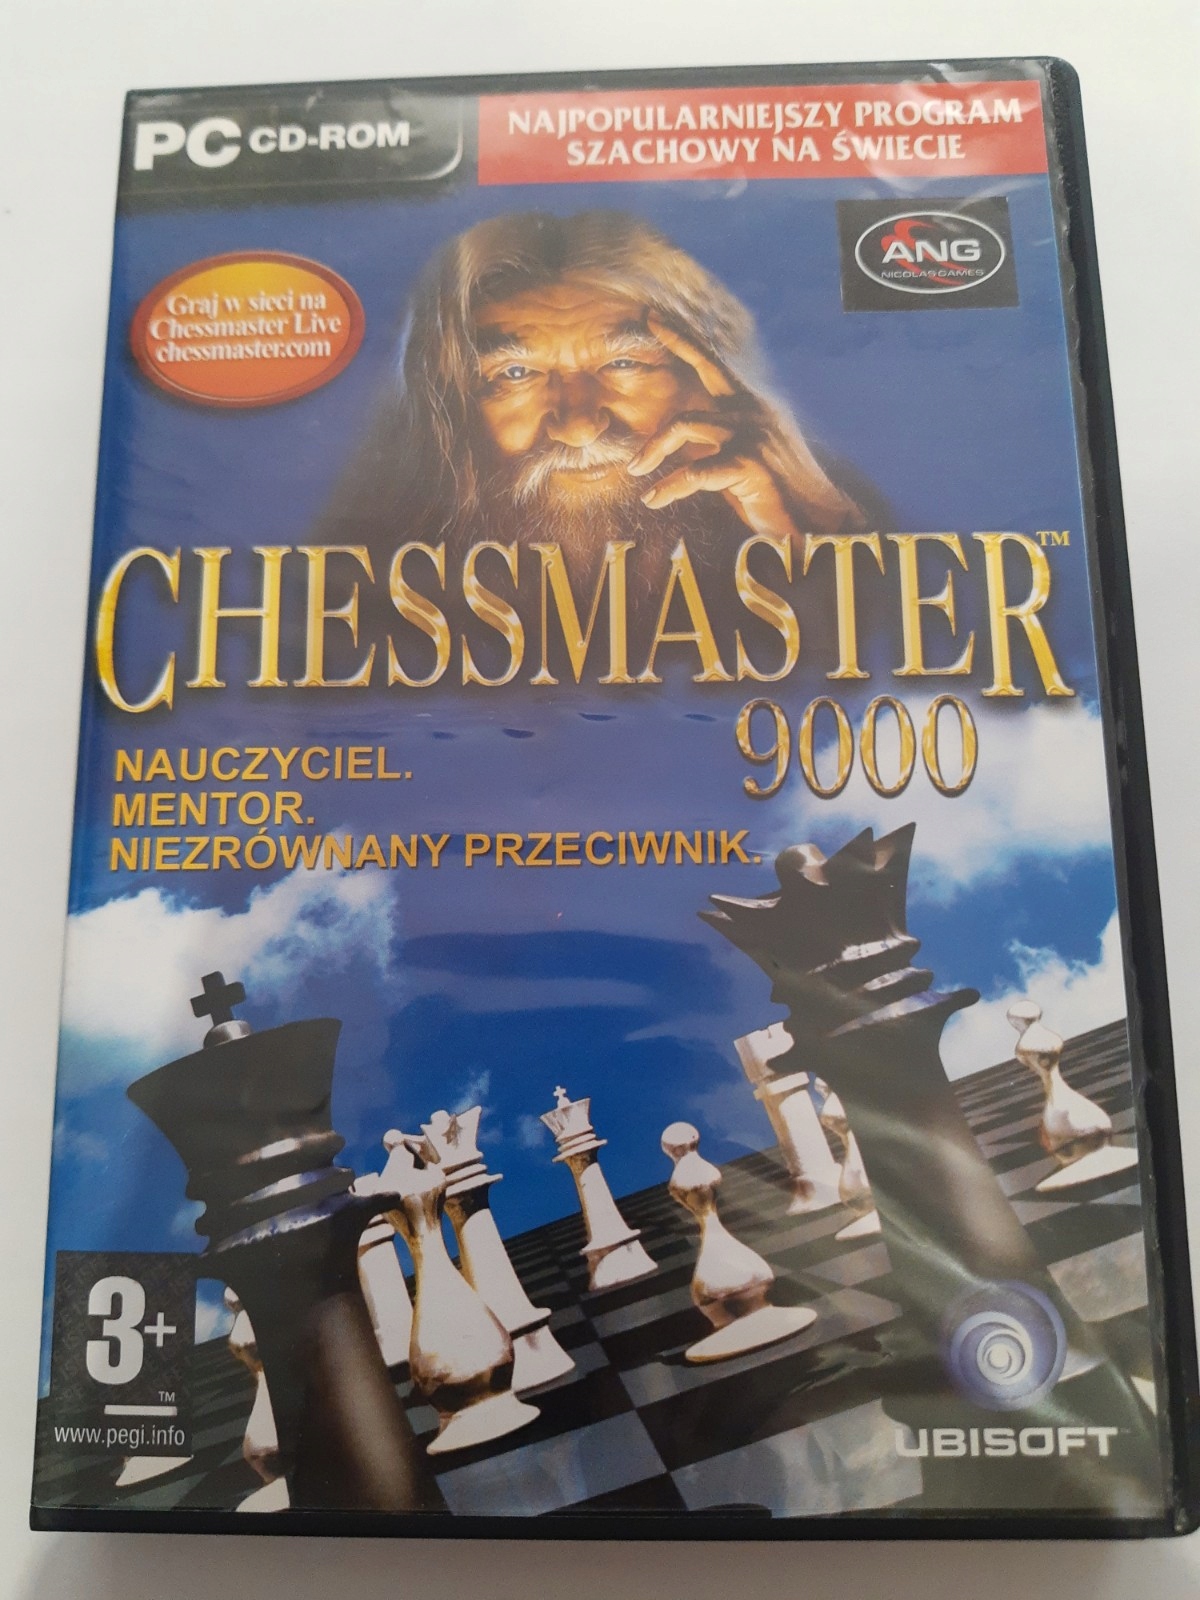 Chessmaster 9000 - Pc